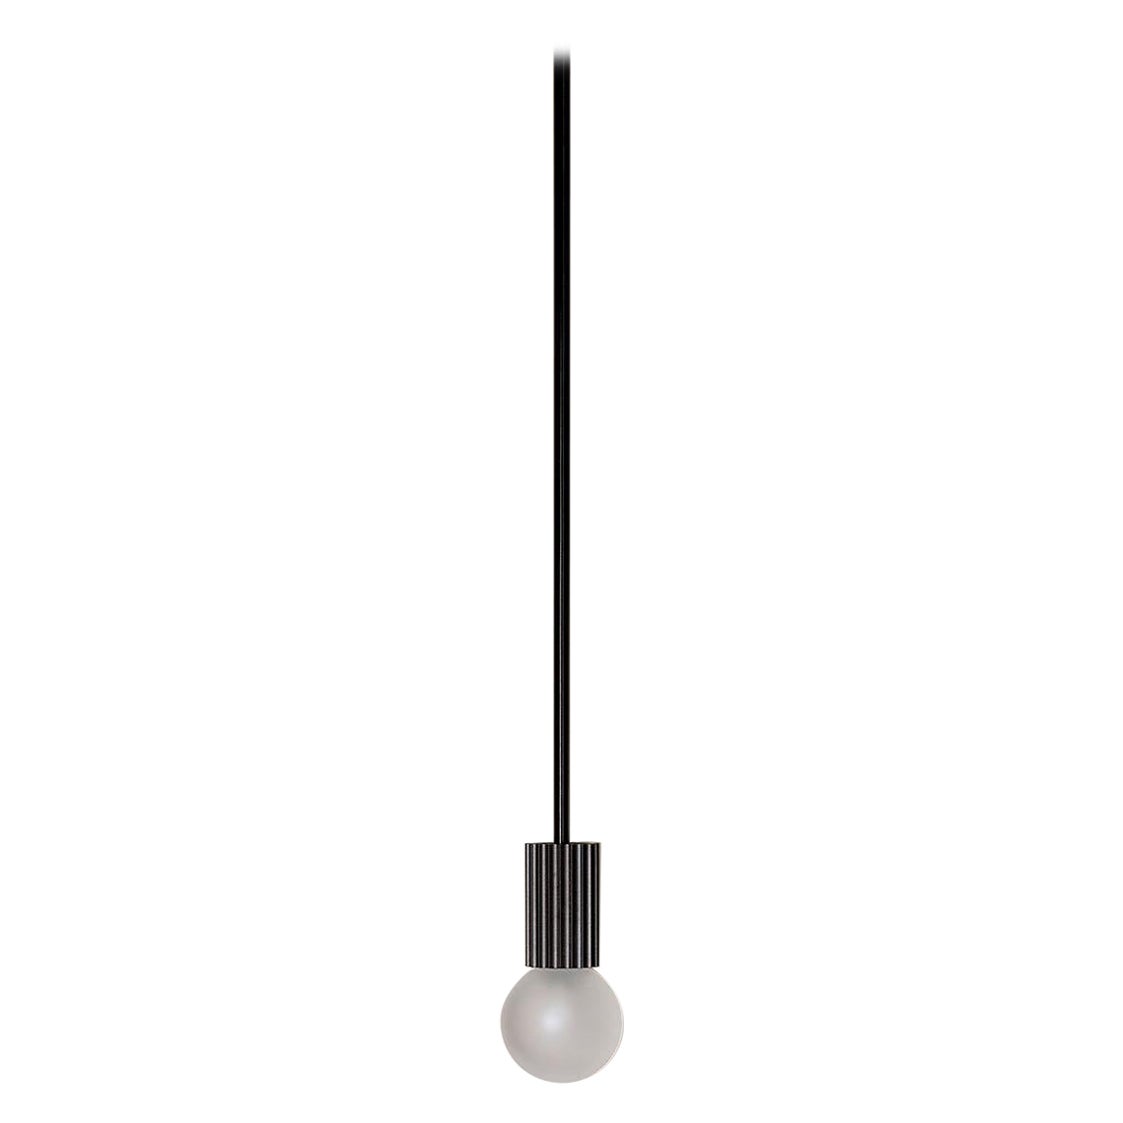 Marz Designs, "Attalos, 95 Suspension Light" (lampe à suspension)